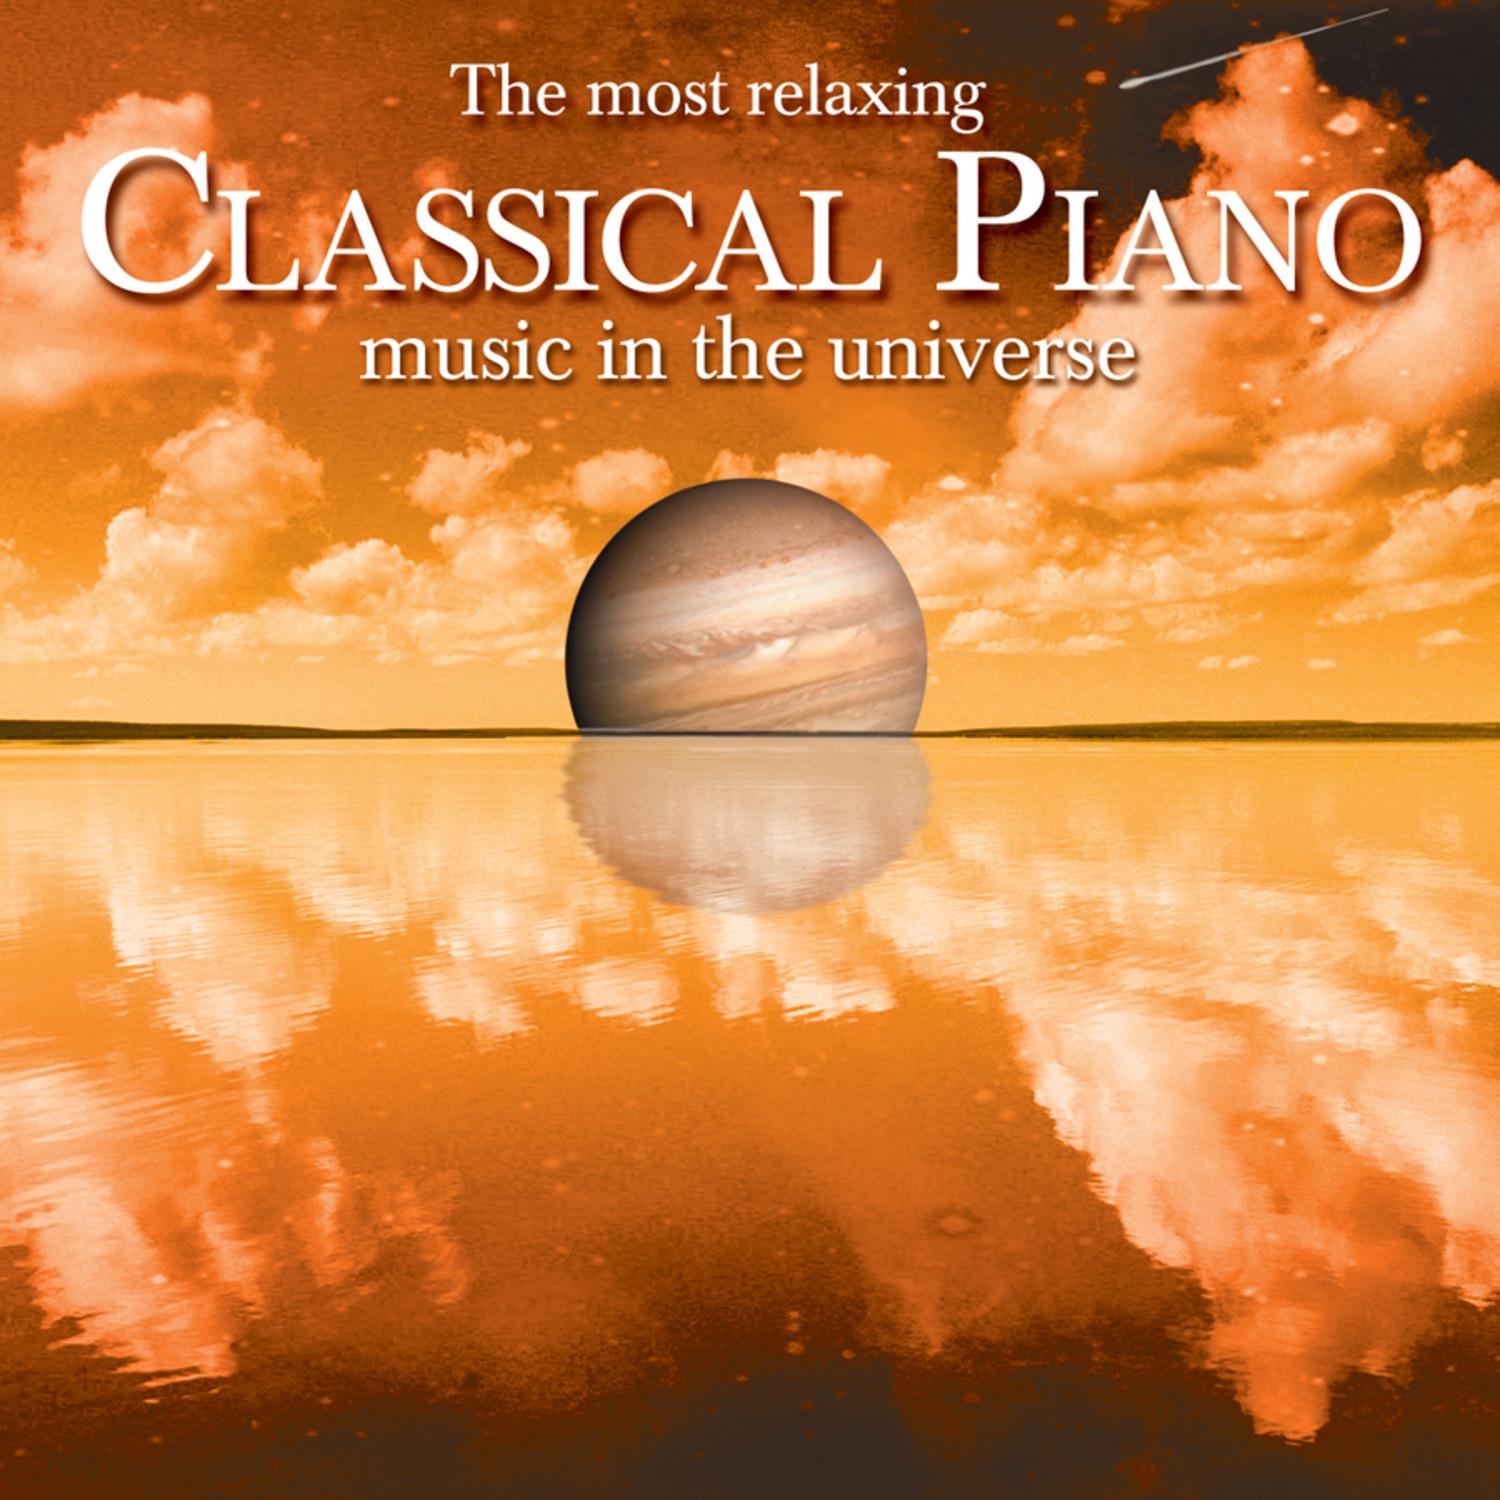 Piano Sonata No. 14 in C-Sharp Minor, Op. 27 'Moonlight': I. Adagio sostenuto